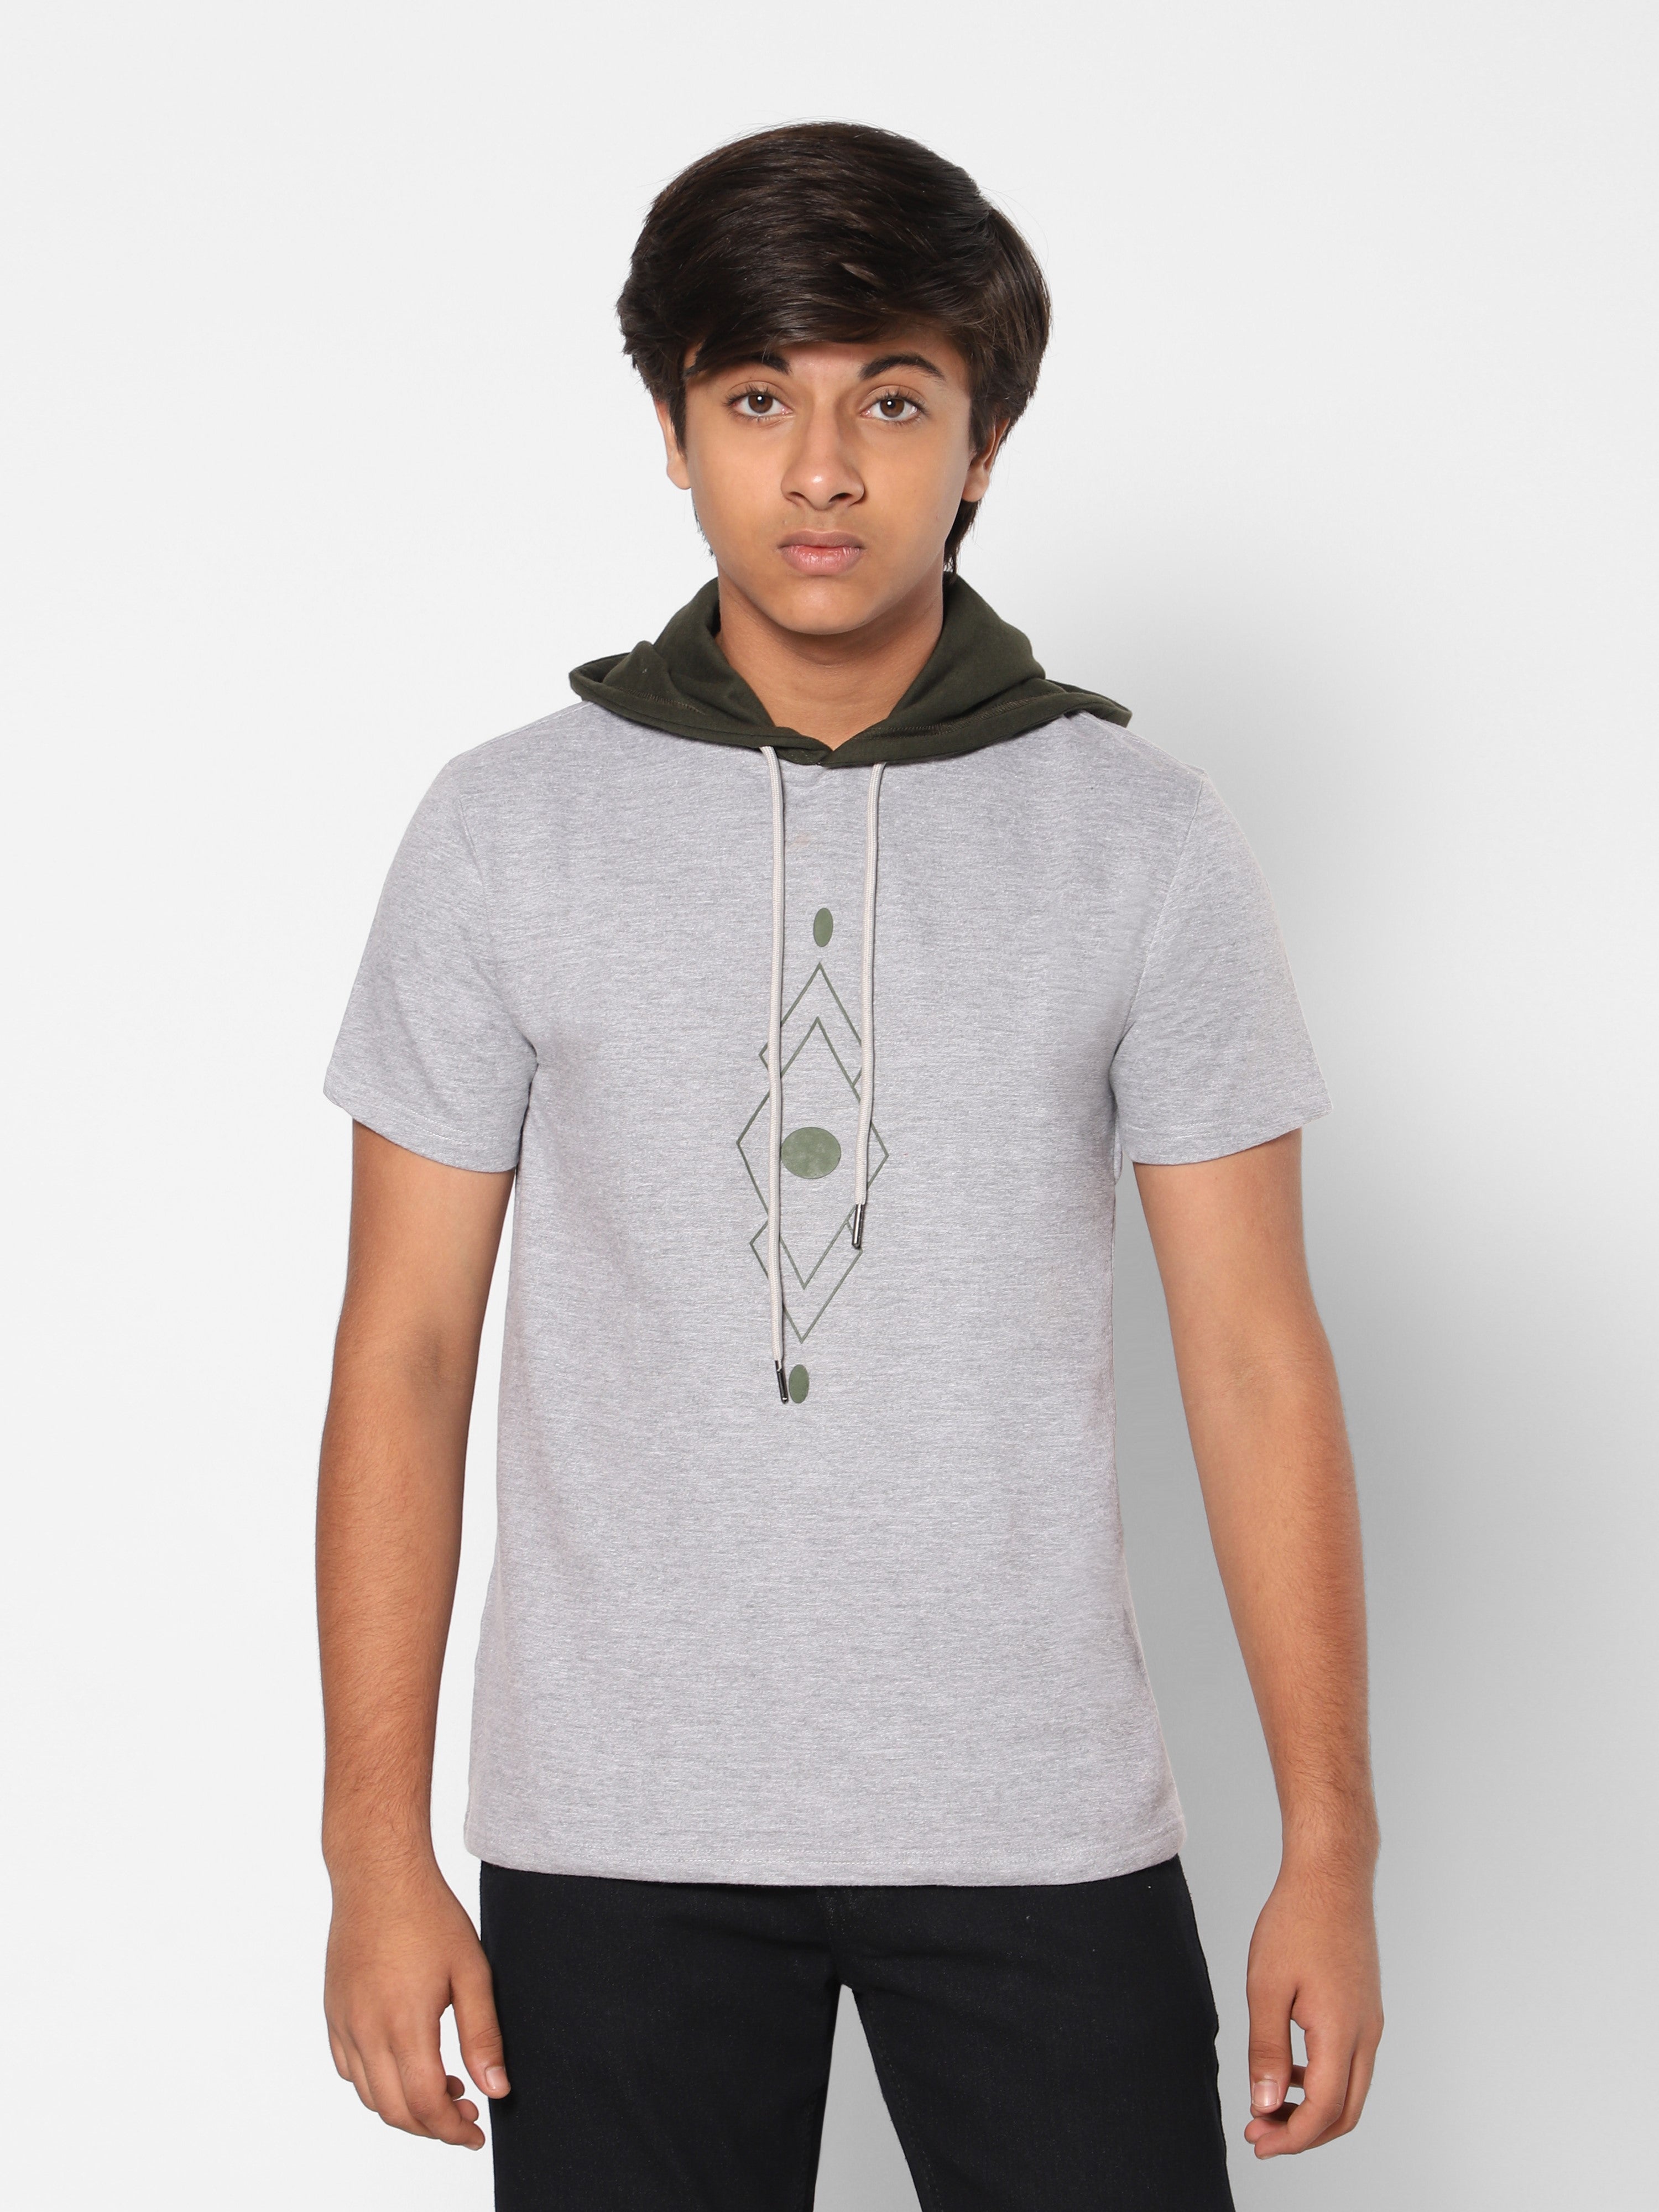 TeenTrums Regular Boys Fashion T-shirt with hoodie - Geometric art - Ecru & olive